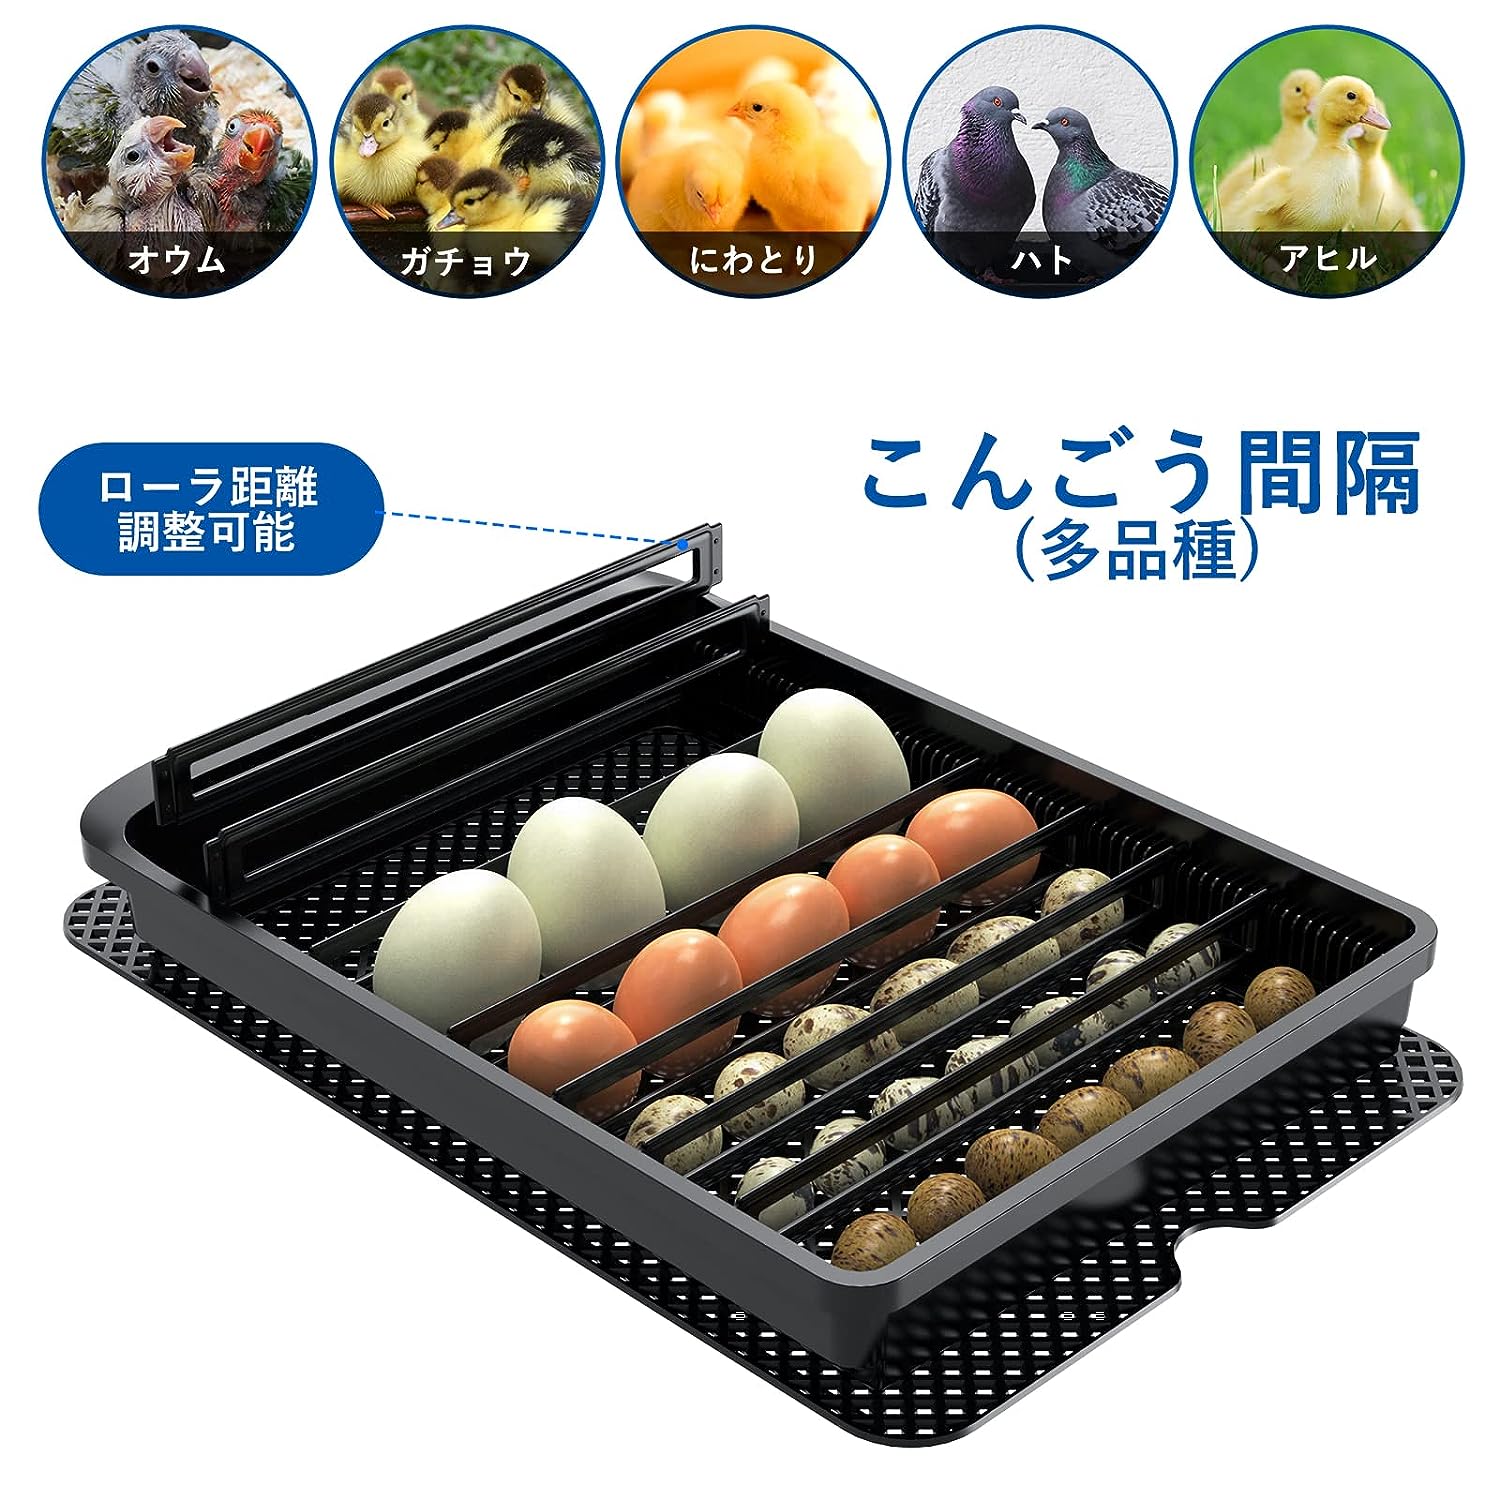 LifeBasis Automatic Egg Incubator